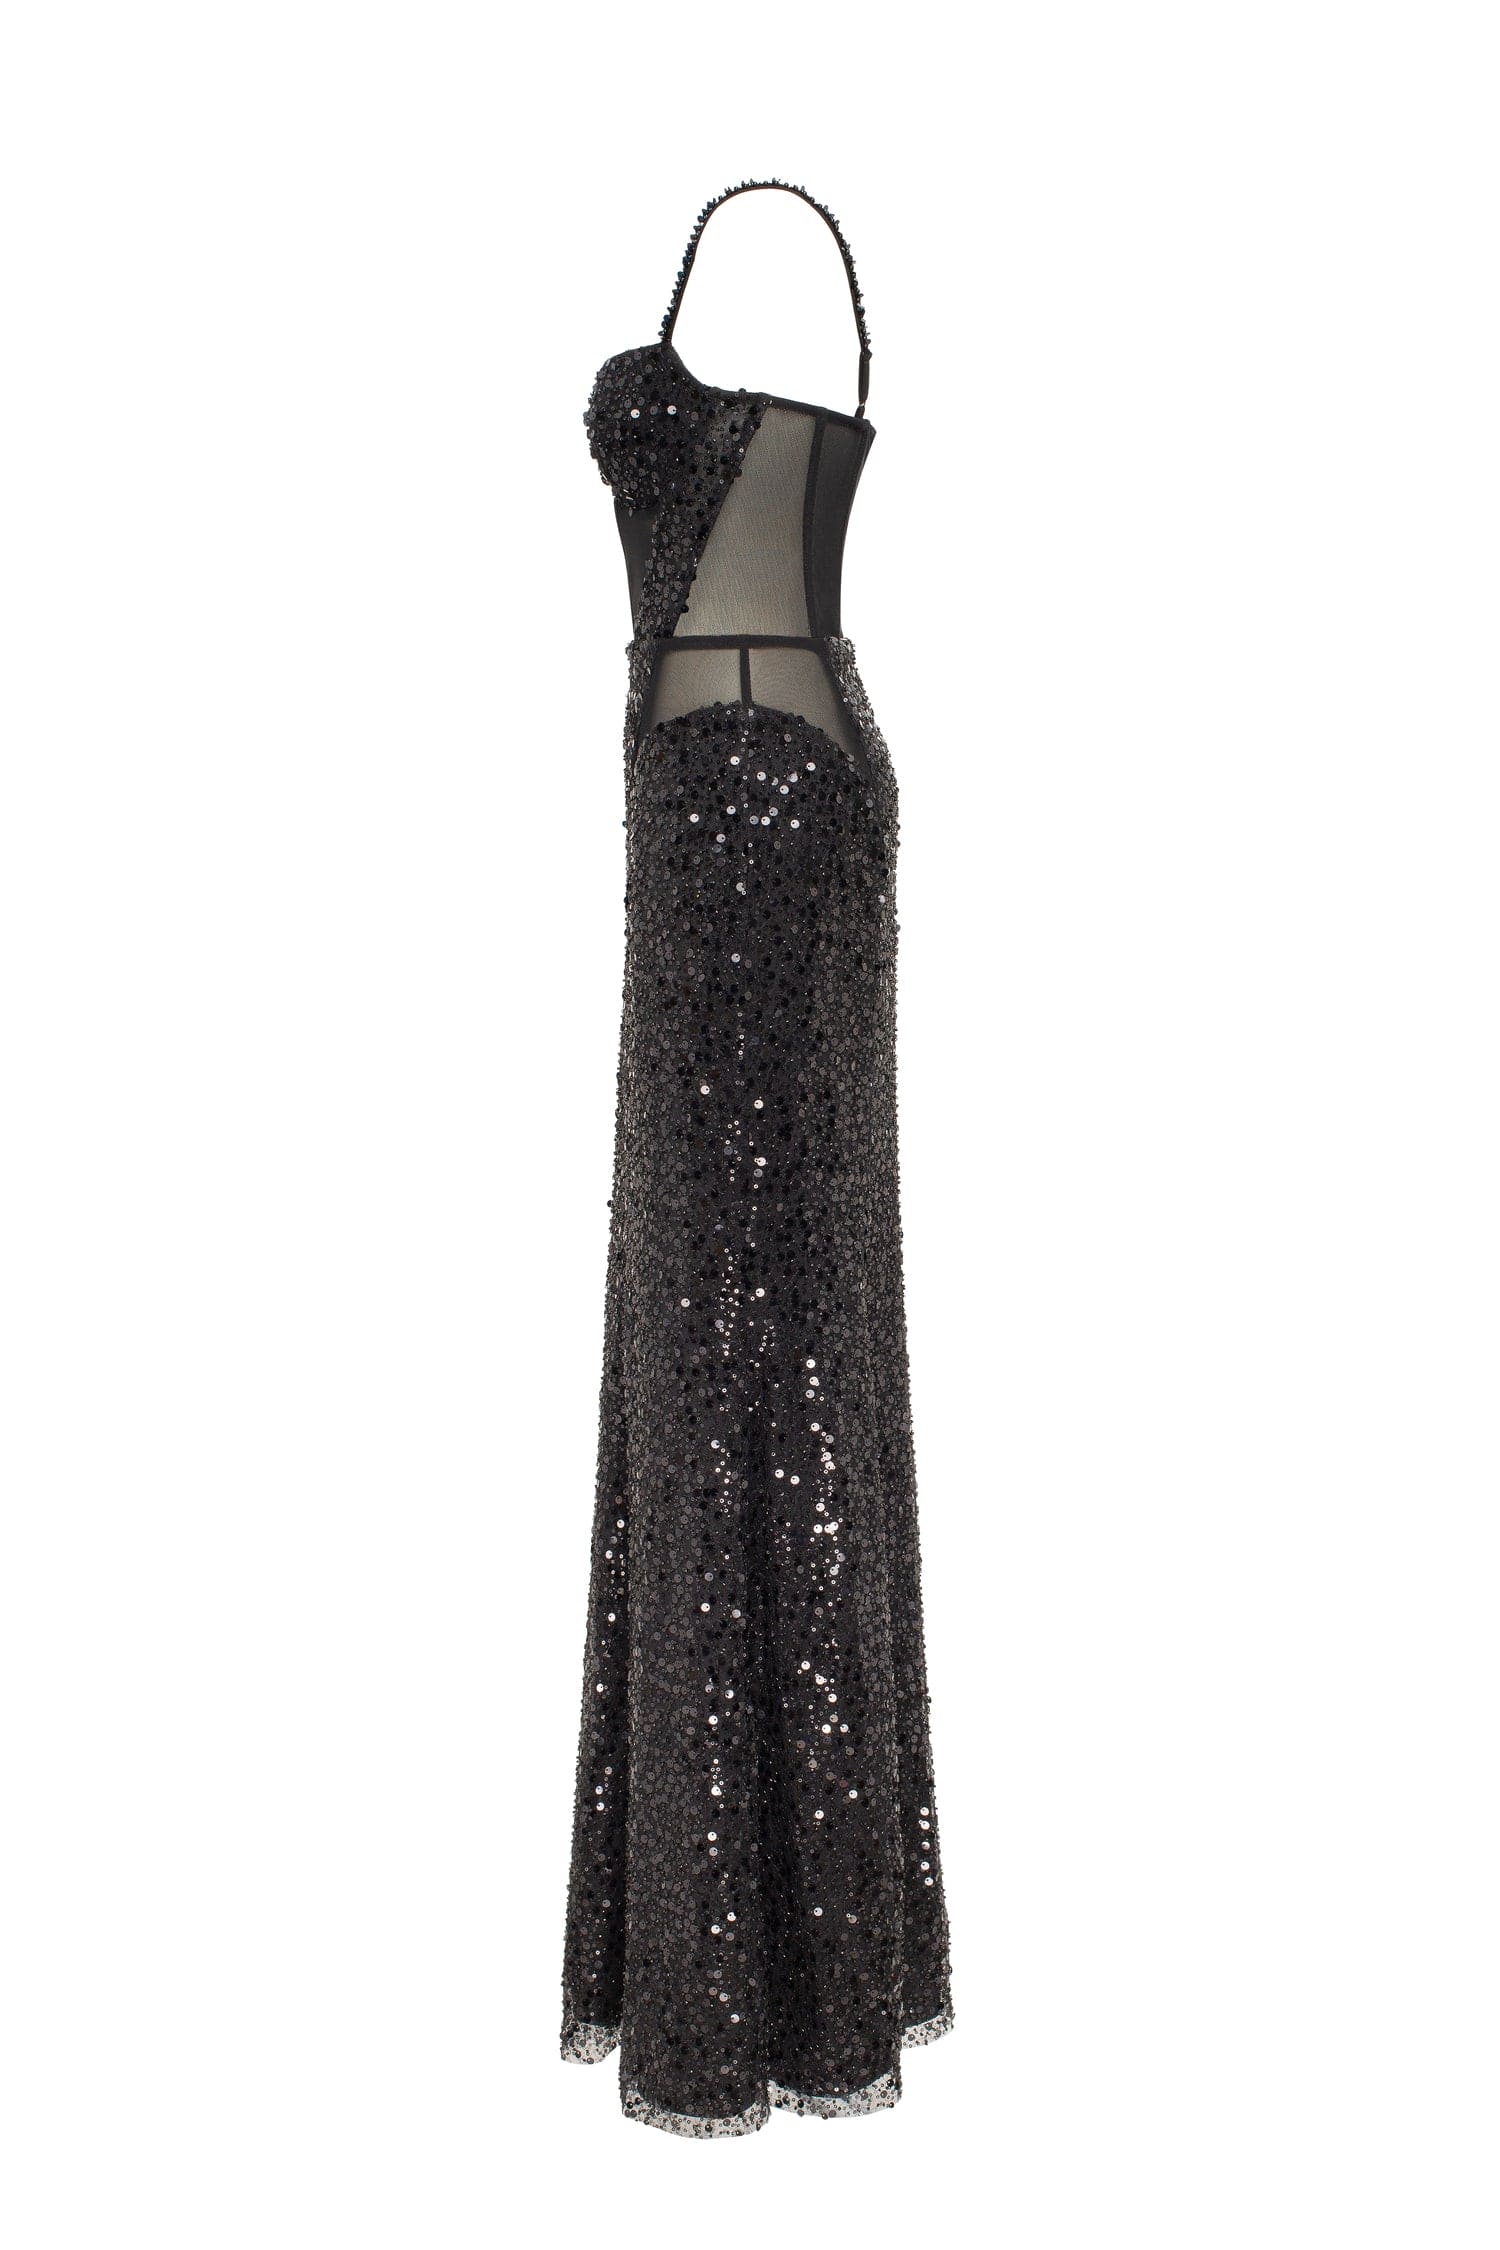 Sensational black maxi on spaghetti straps covered in sequins, Smoky Quartz  ➤➤ Milla Dresses - USA, Worldwide delivery